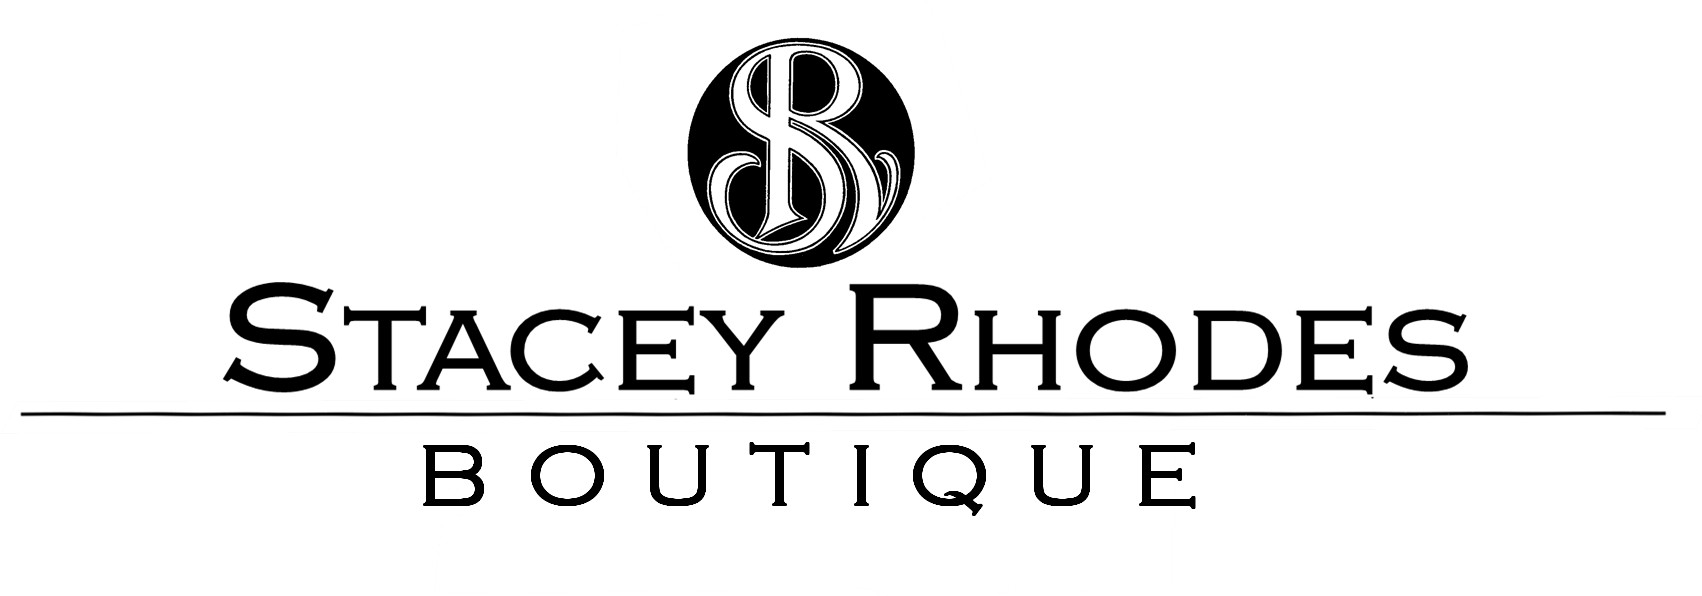 Stacey Rhodes Boutique